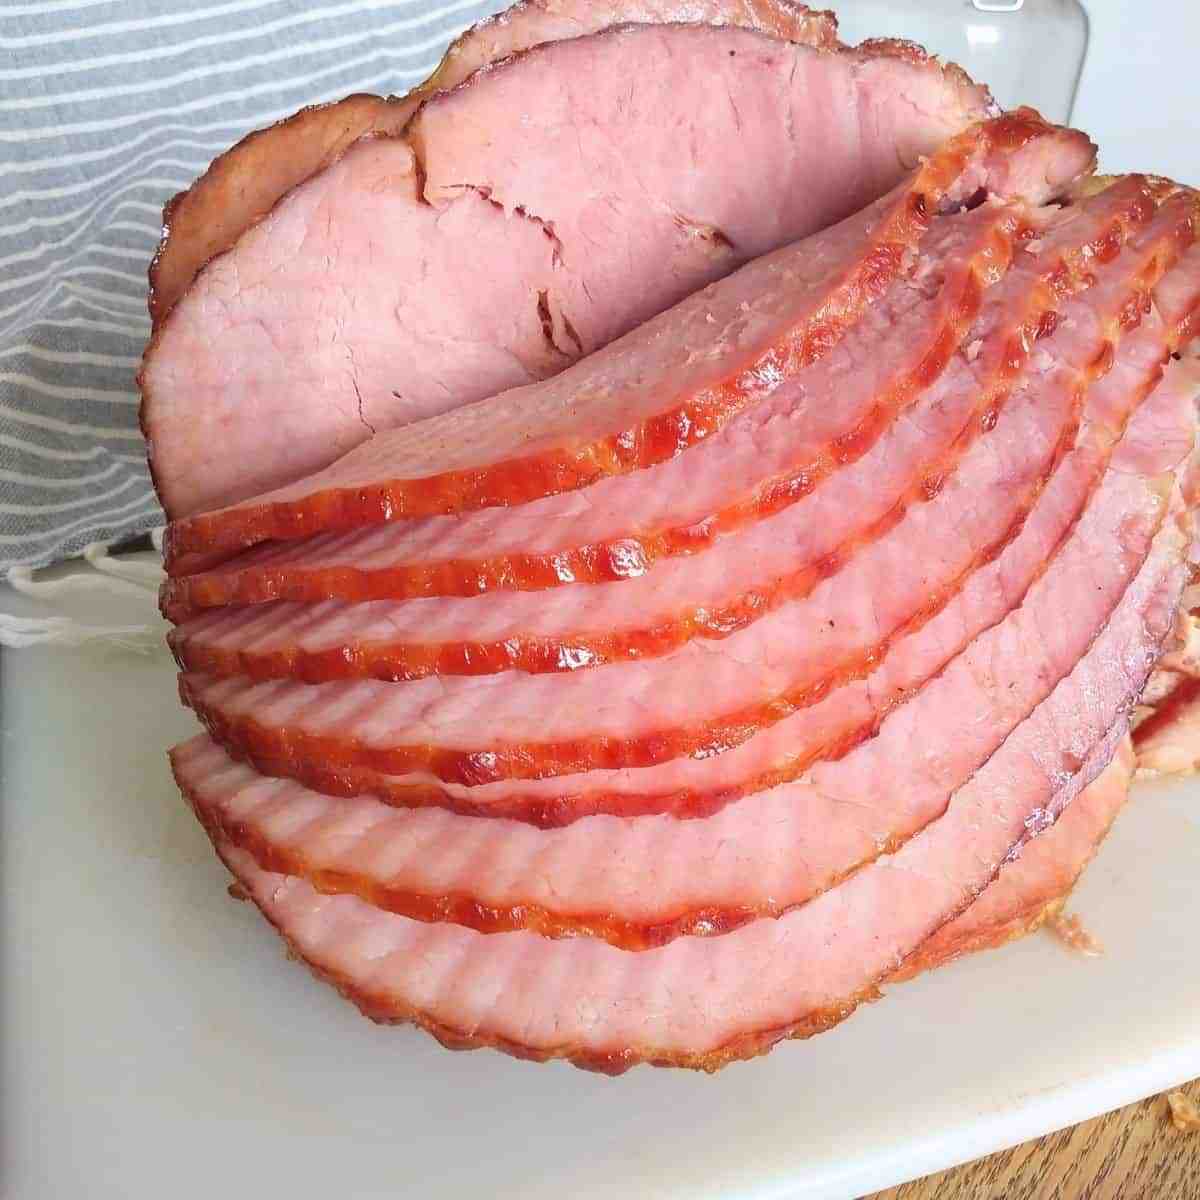 Why did my ham turn gray?